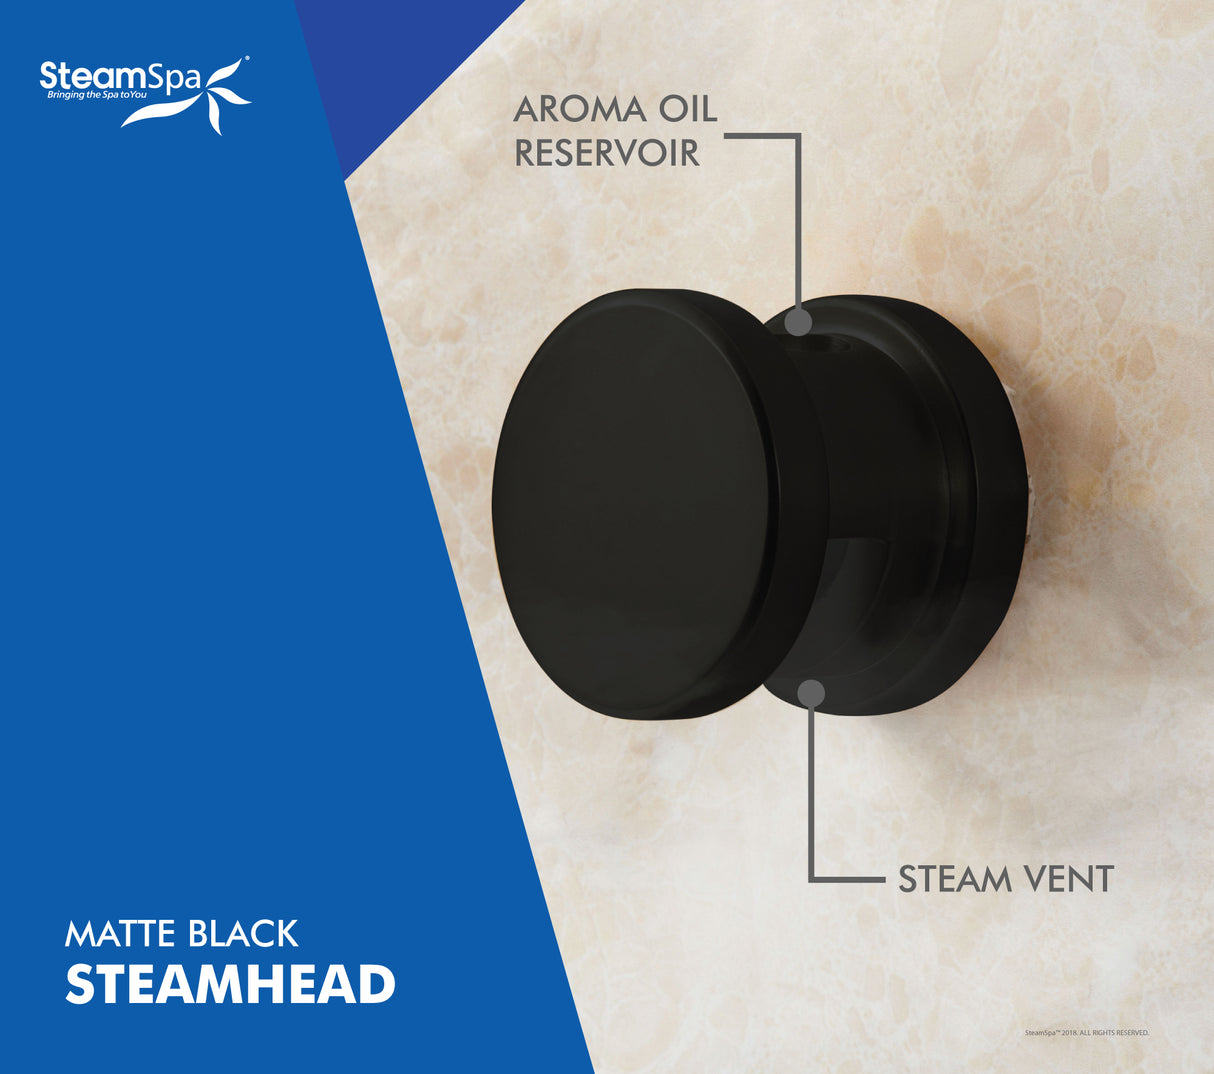 SteamSpa Premium 9 KW QuickStart Acu-Steam Bath Generator Package with Built-in Auto Drain in Matt Black PRR900BK-A